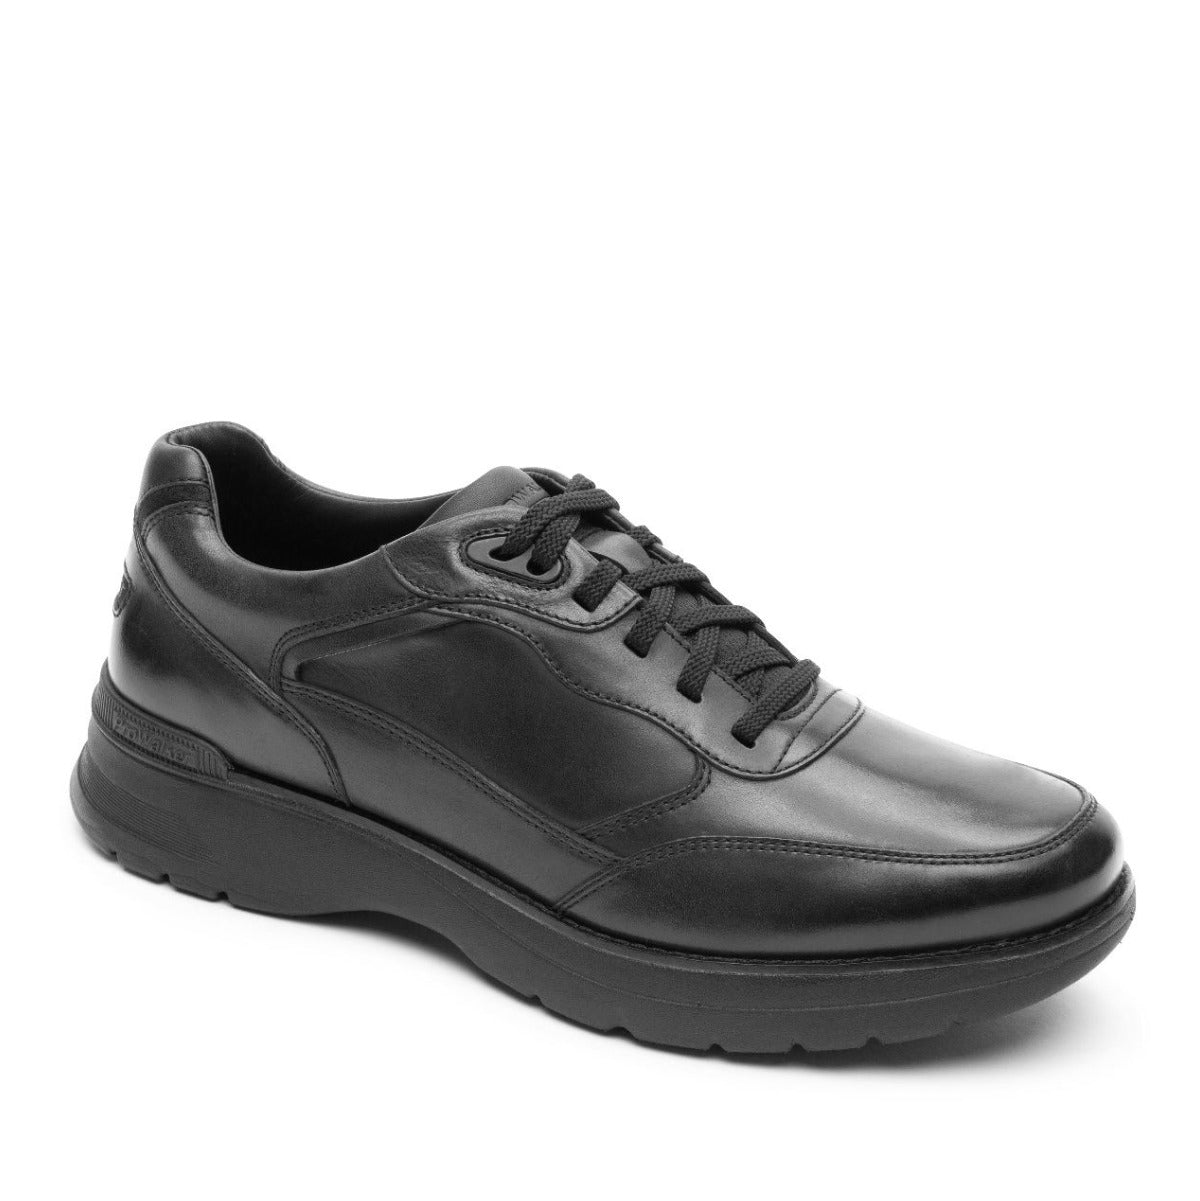 Rockport Prowalker NEXT UBal Black נעלי גברים רוקפורט